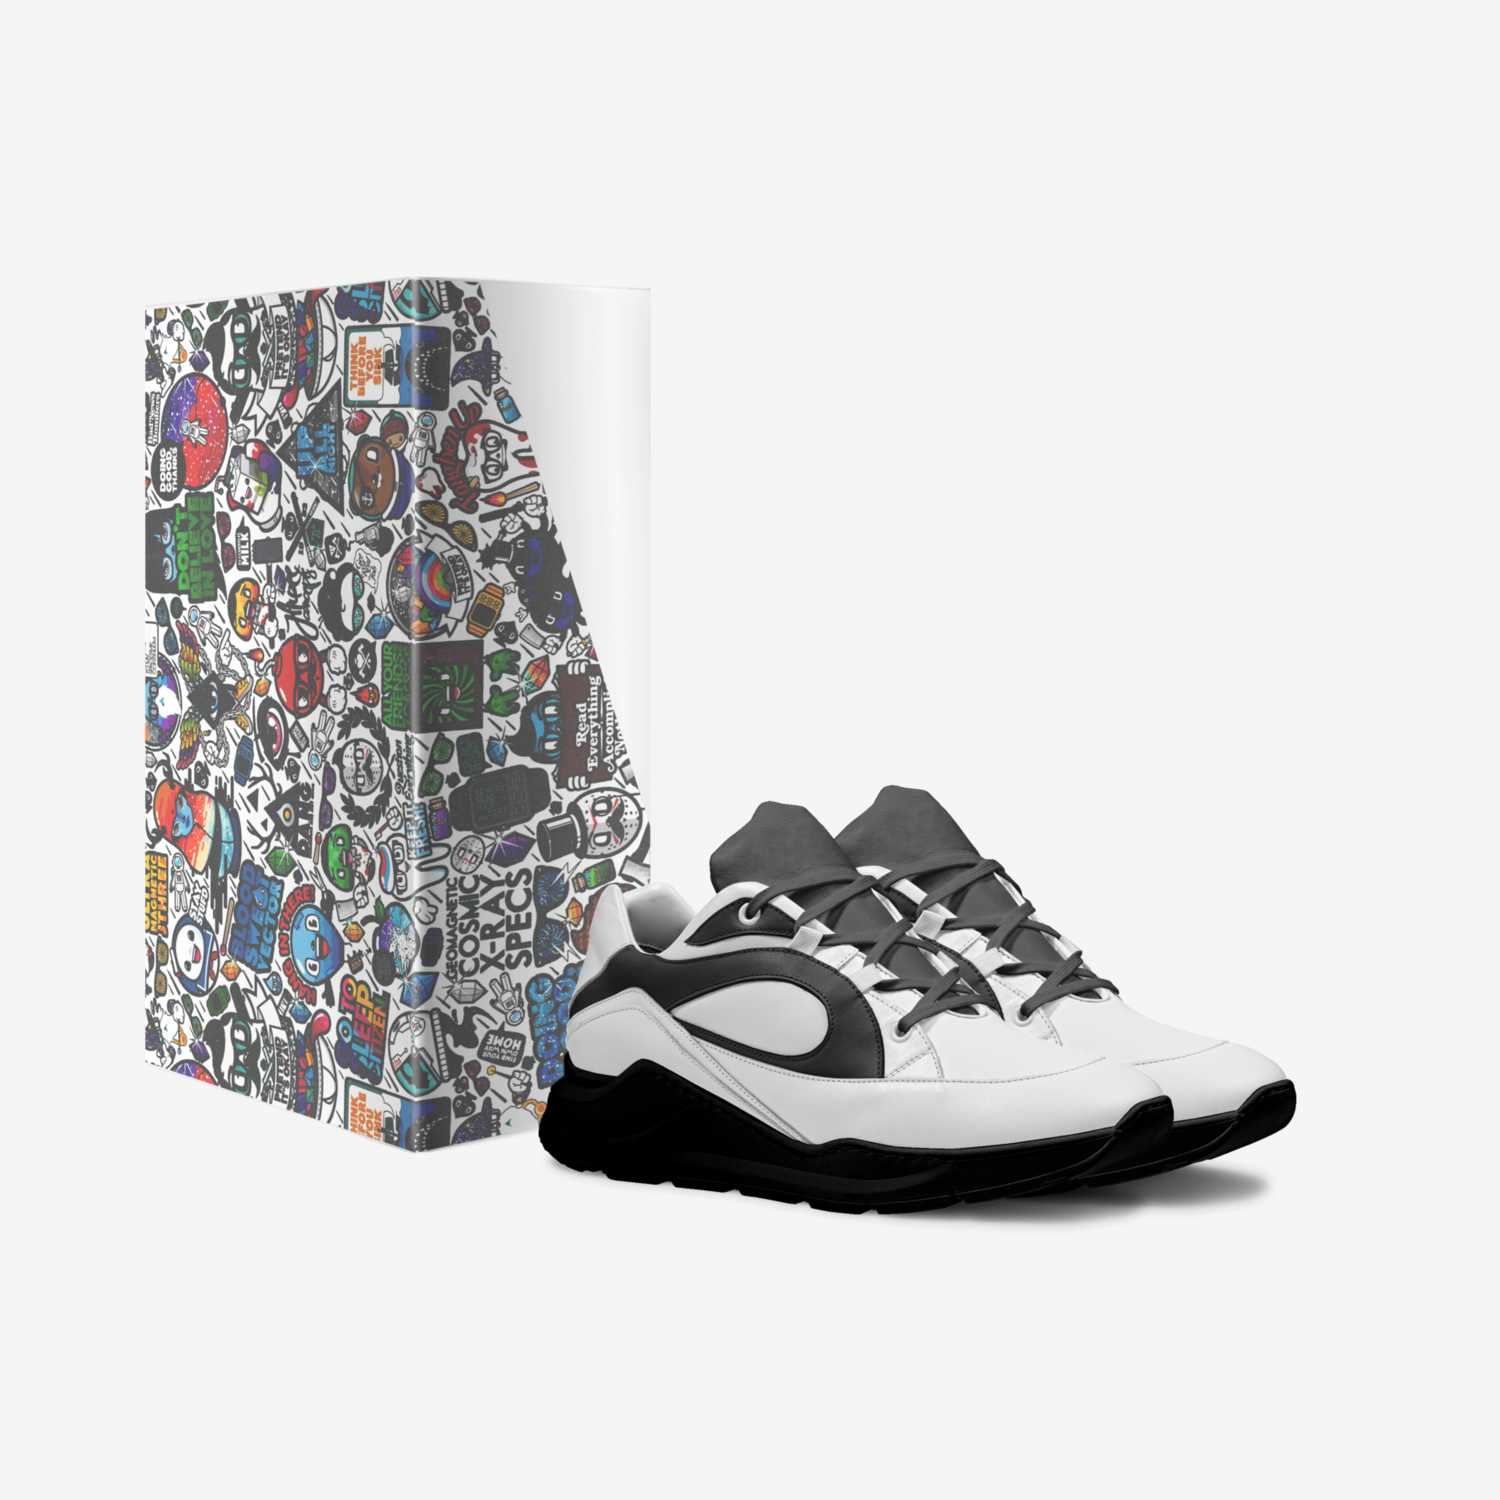 ANUMA custom made in Italy shoes by Genesis Rasheen | Box view